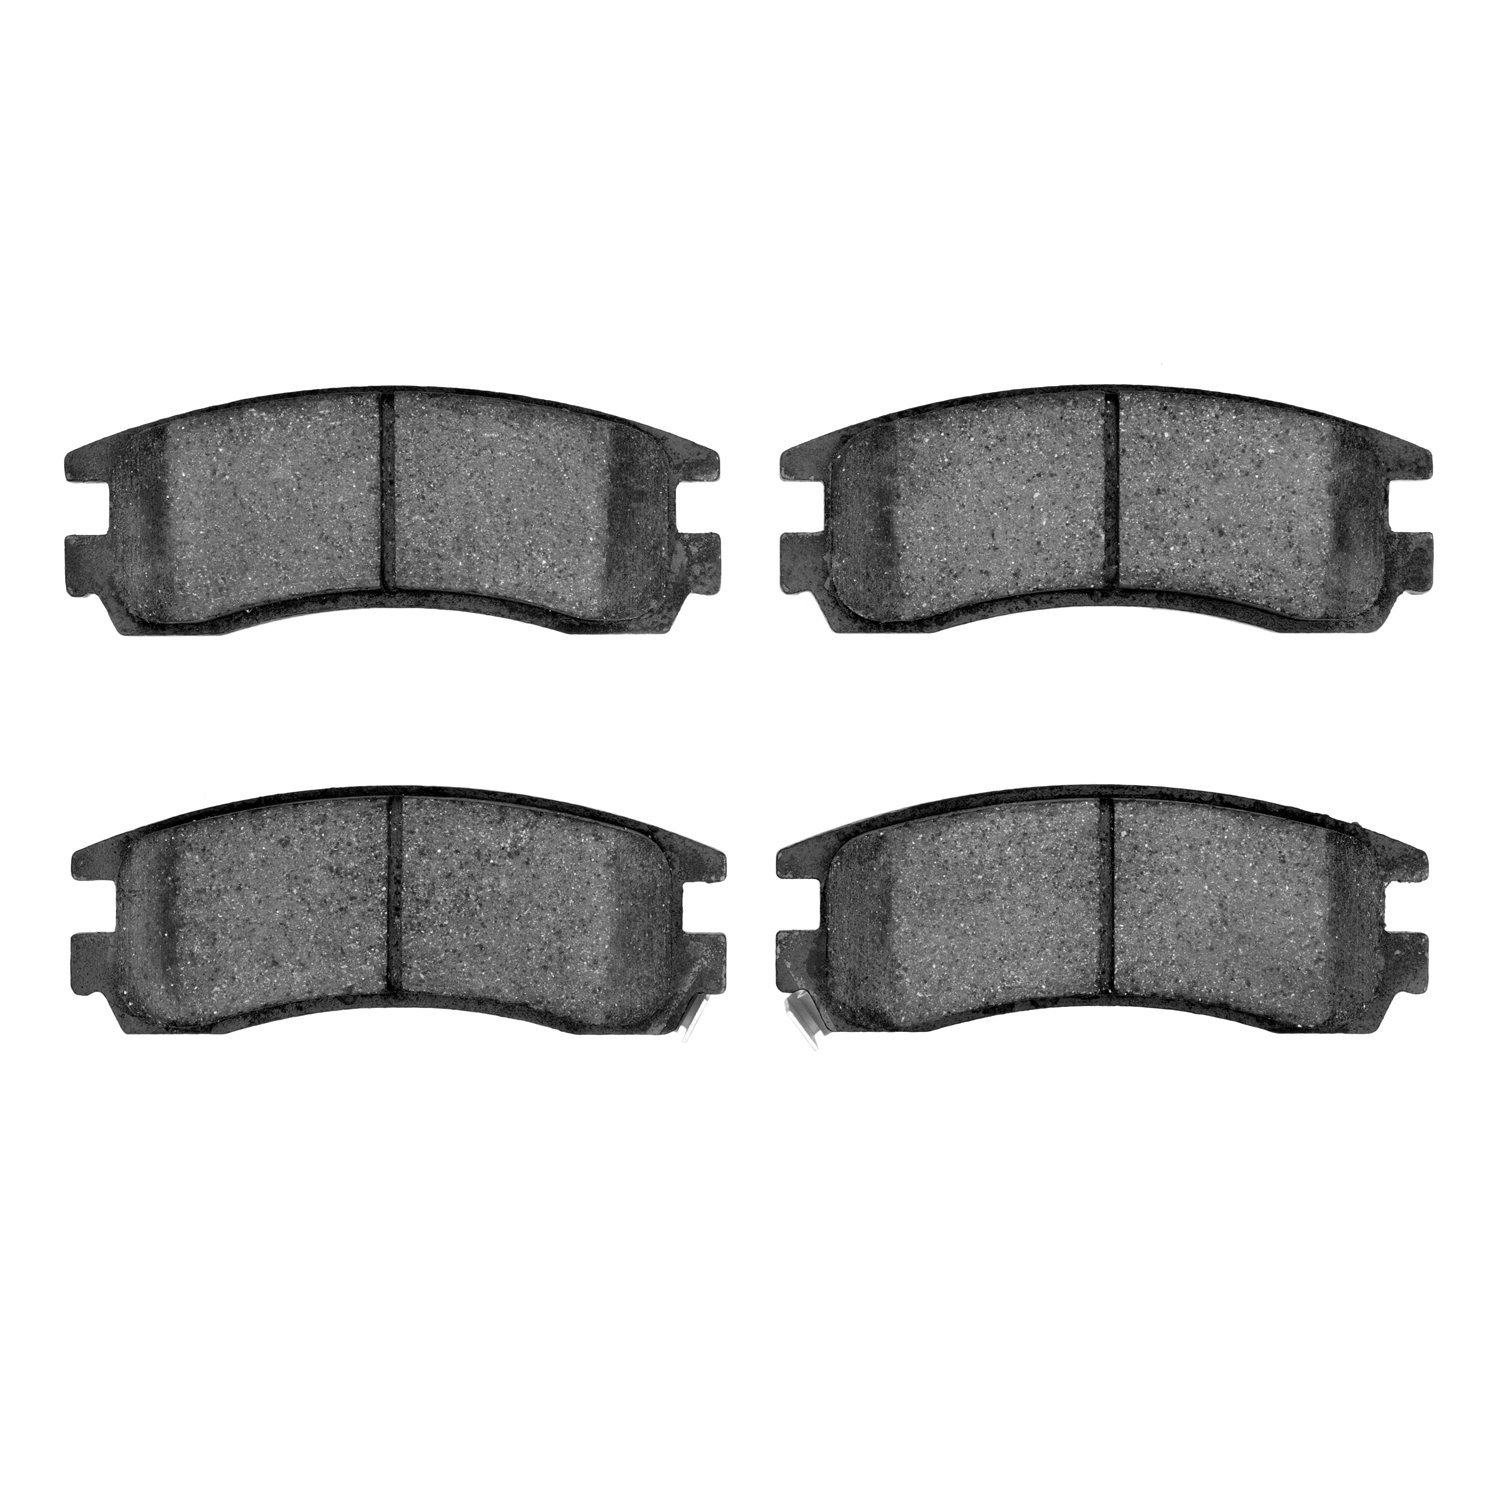 Euro Ceramic Brake Pads, 1995-2010 Fits Multiple Makes/Models, Position: Front & Rear